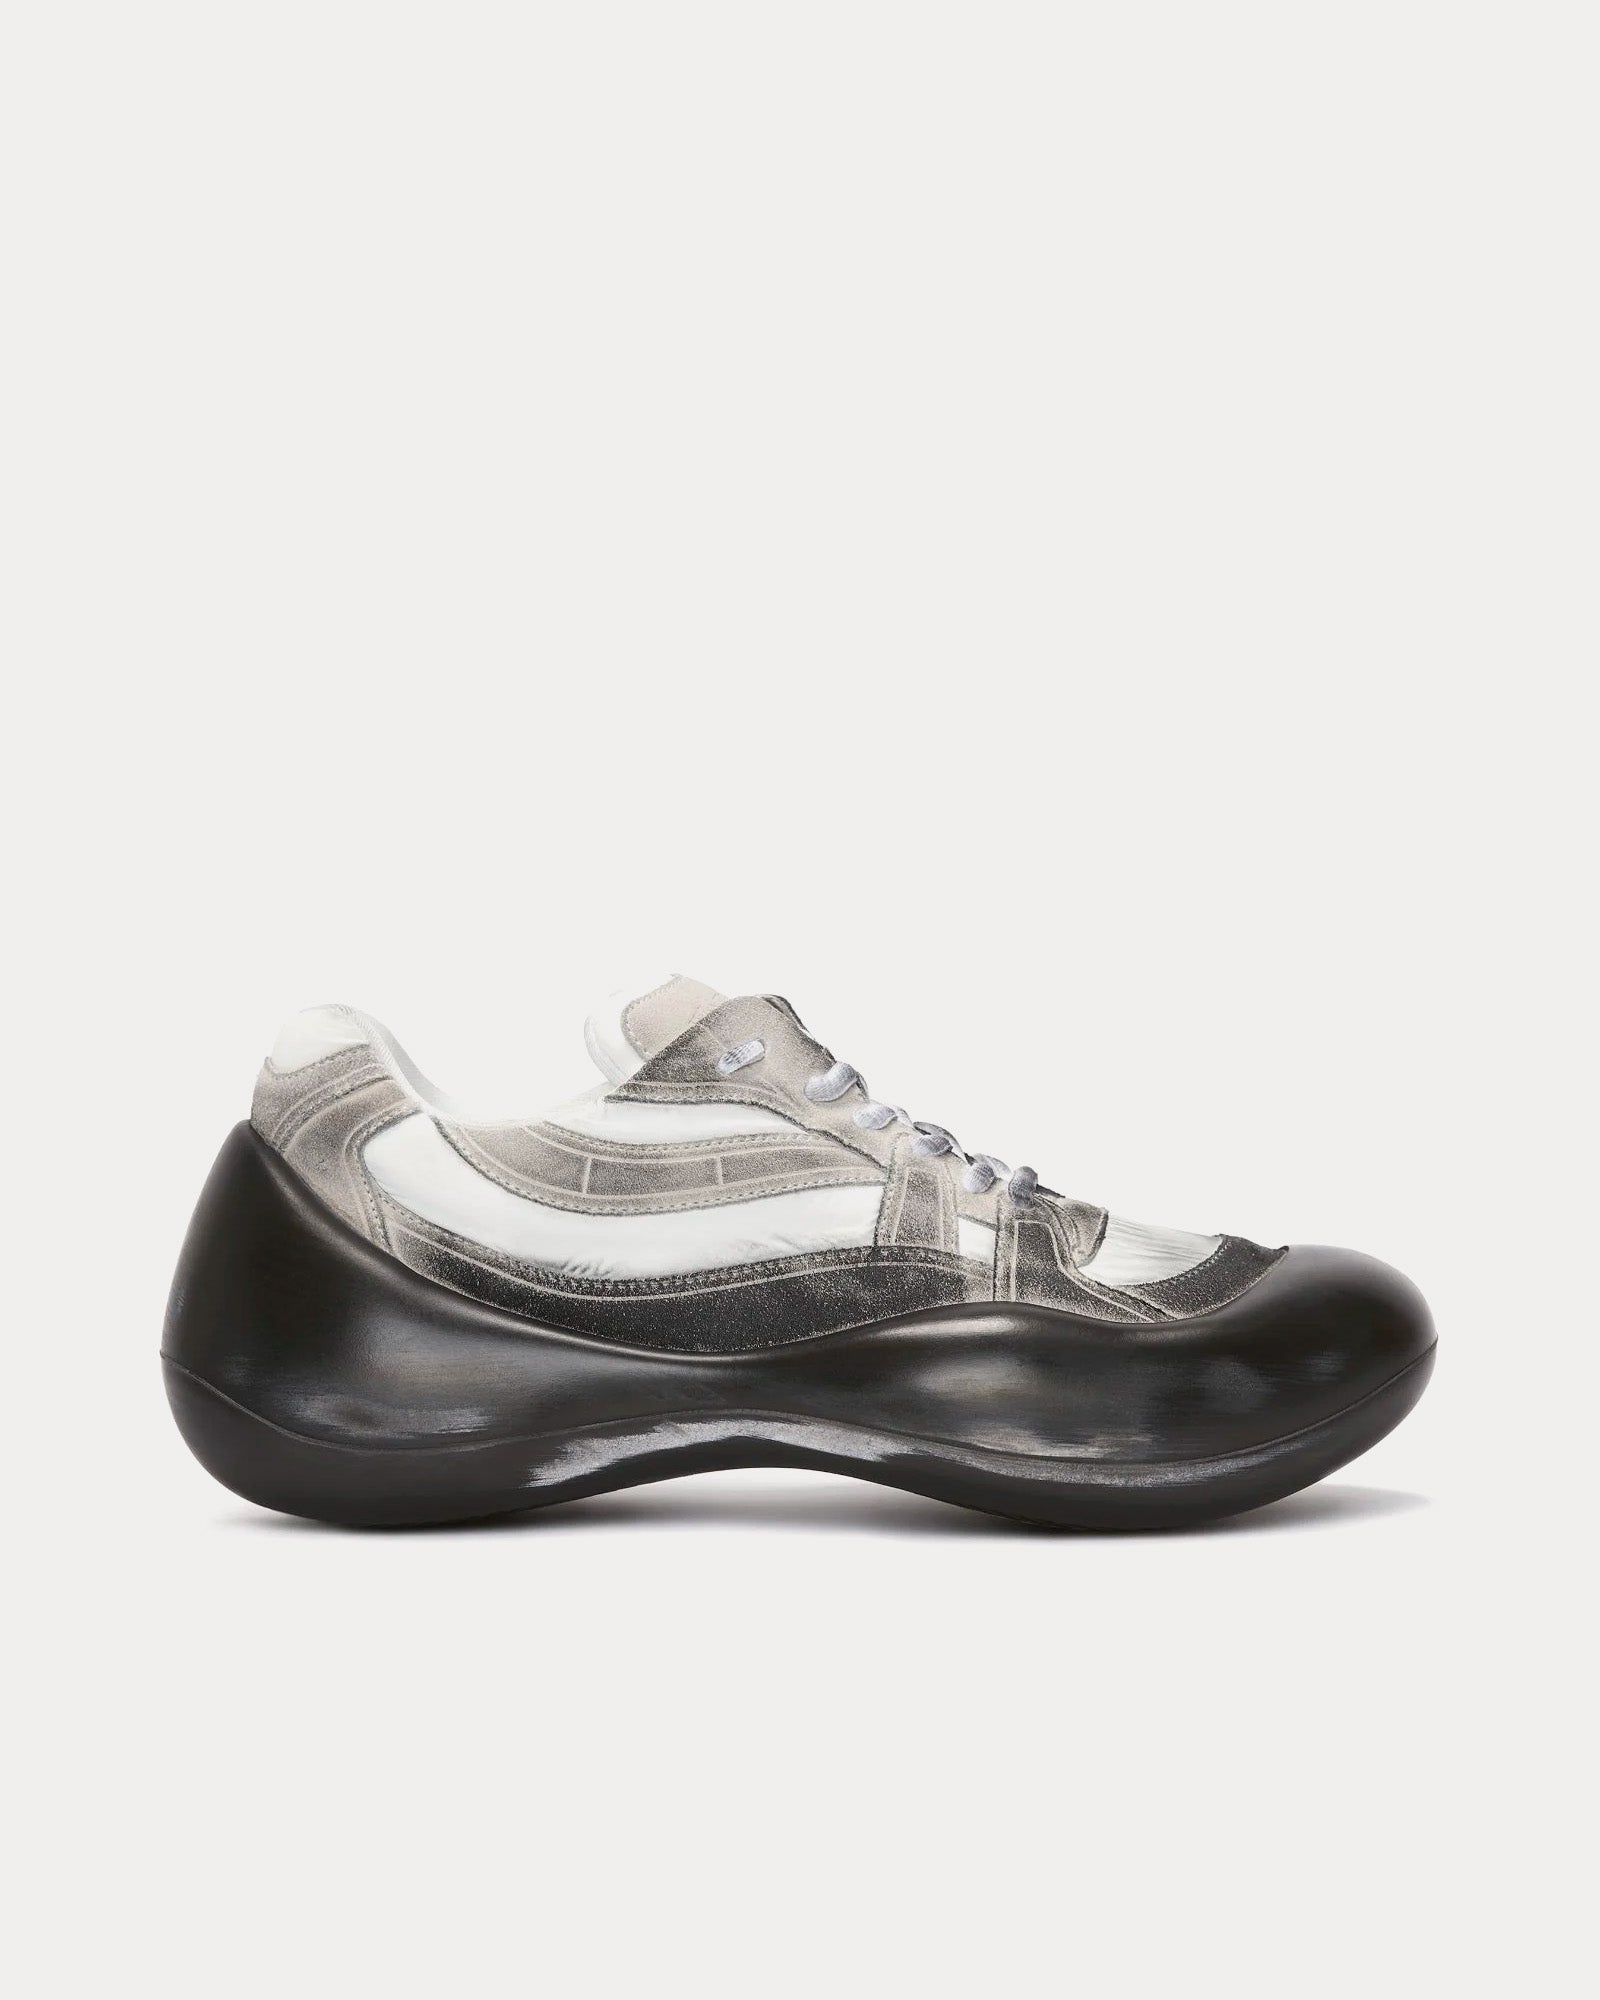 JW Anderson - Bumper-Hike Distressed Black / Light Grey Low Top Sneakers